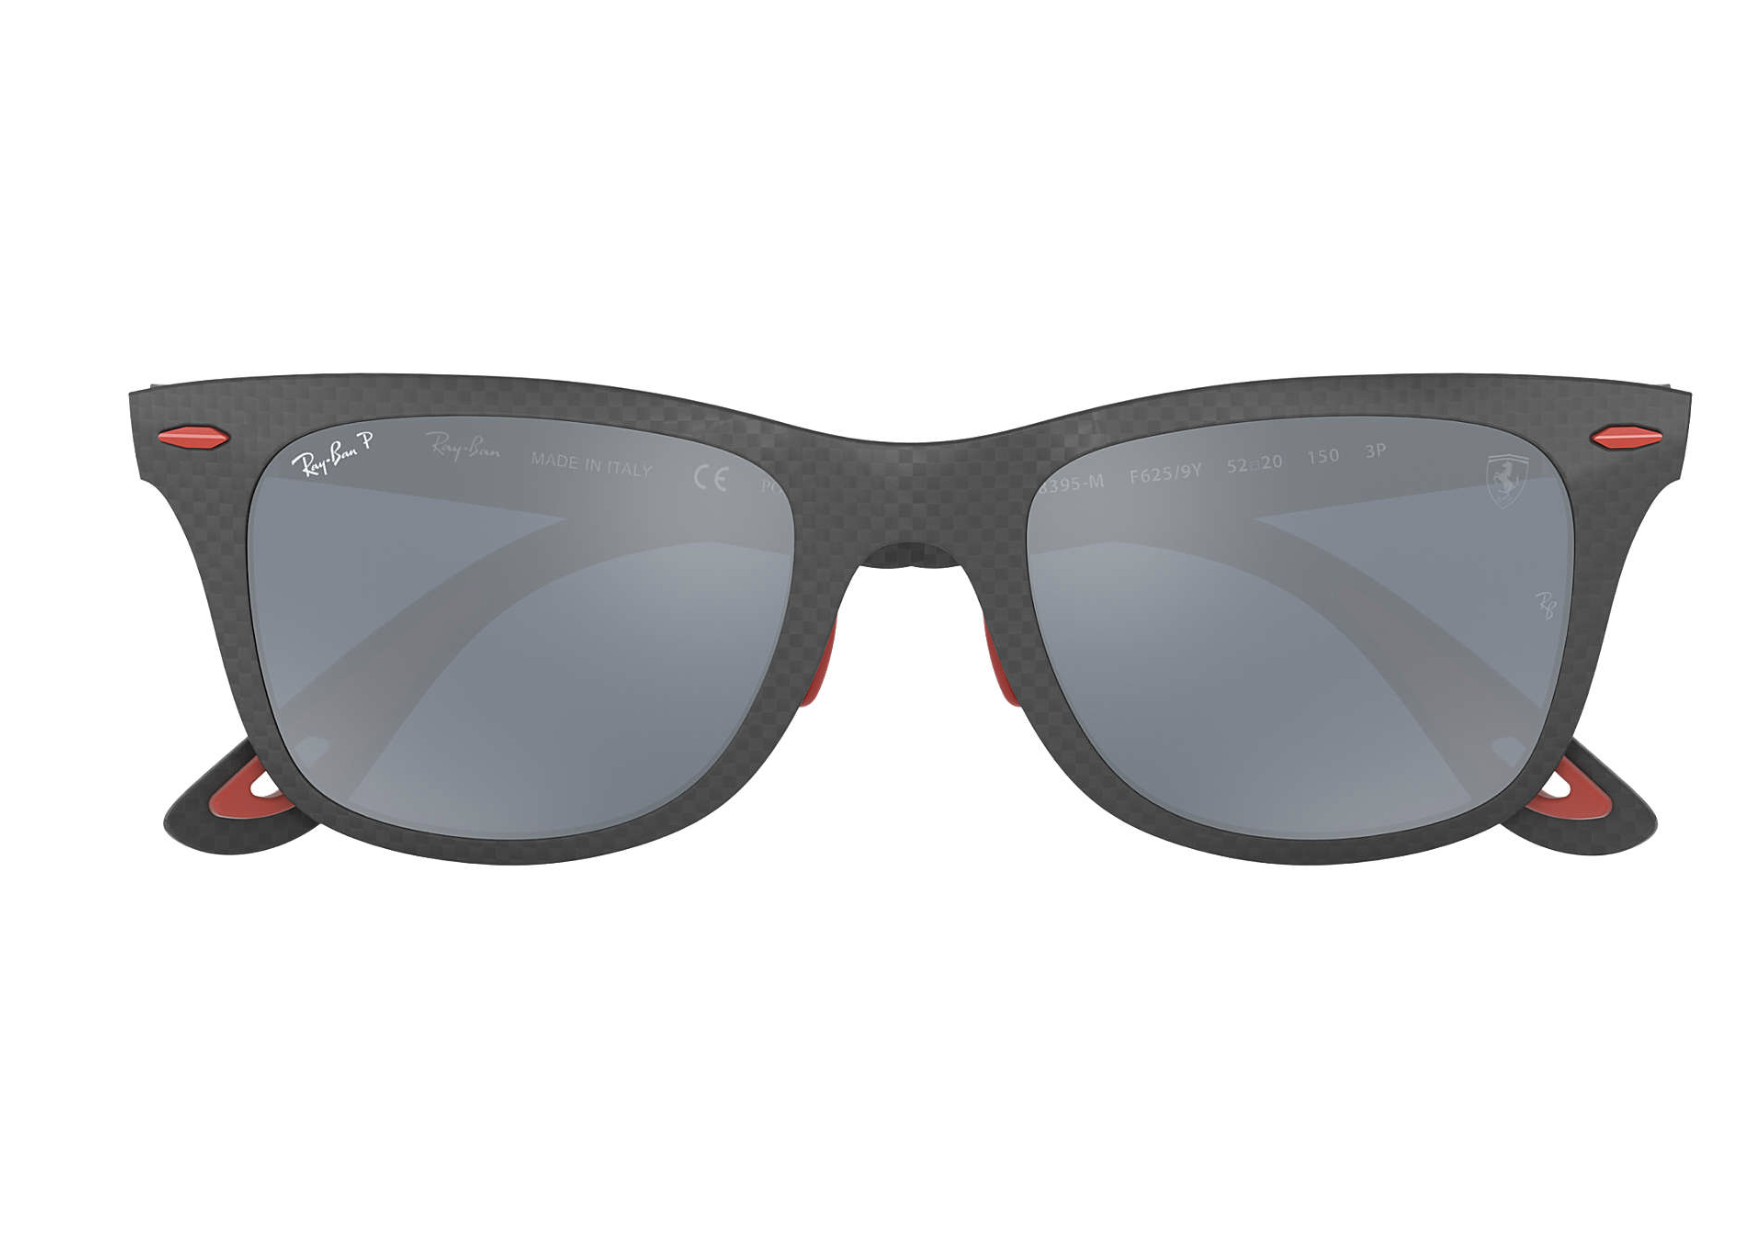 Scuderia Ferrari Monaco Limited Edition Sunglasses by Ray-Ban - Choice Gear